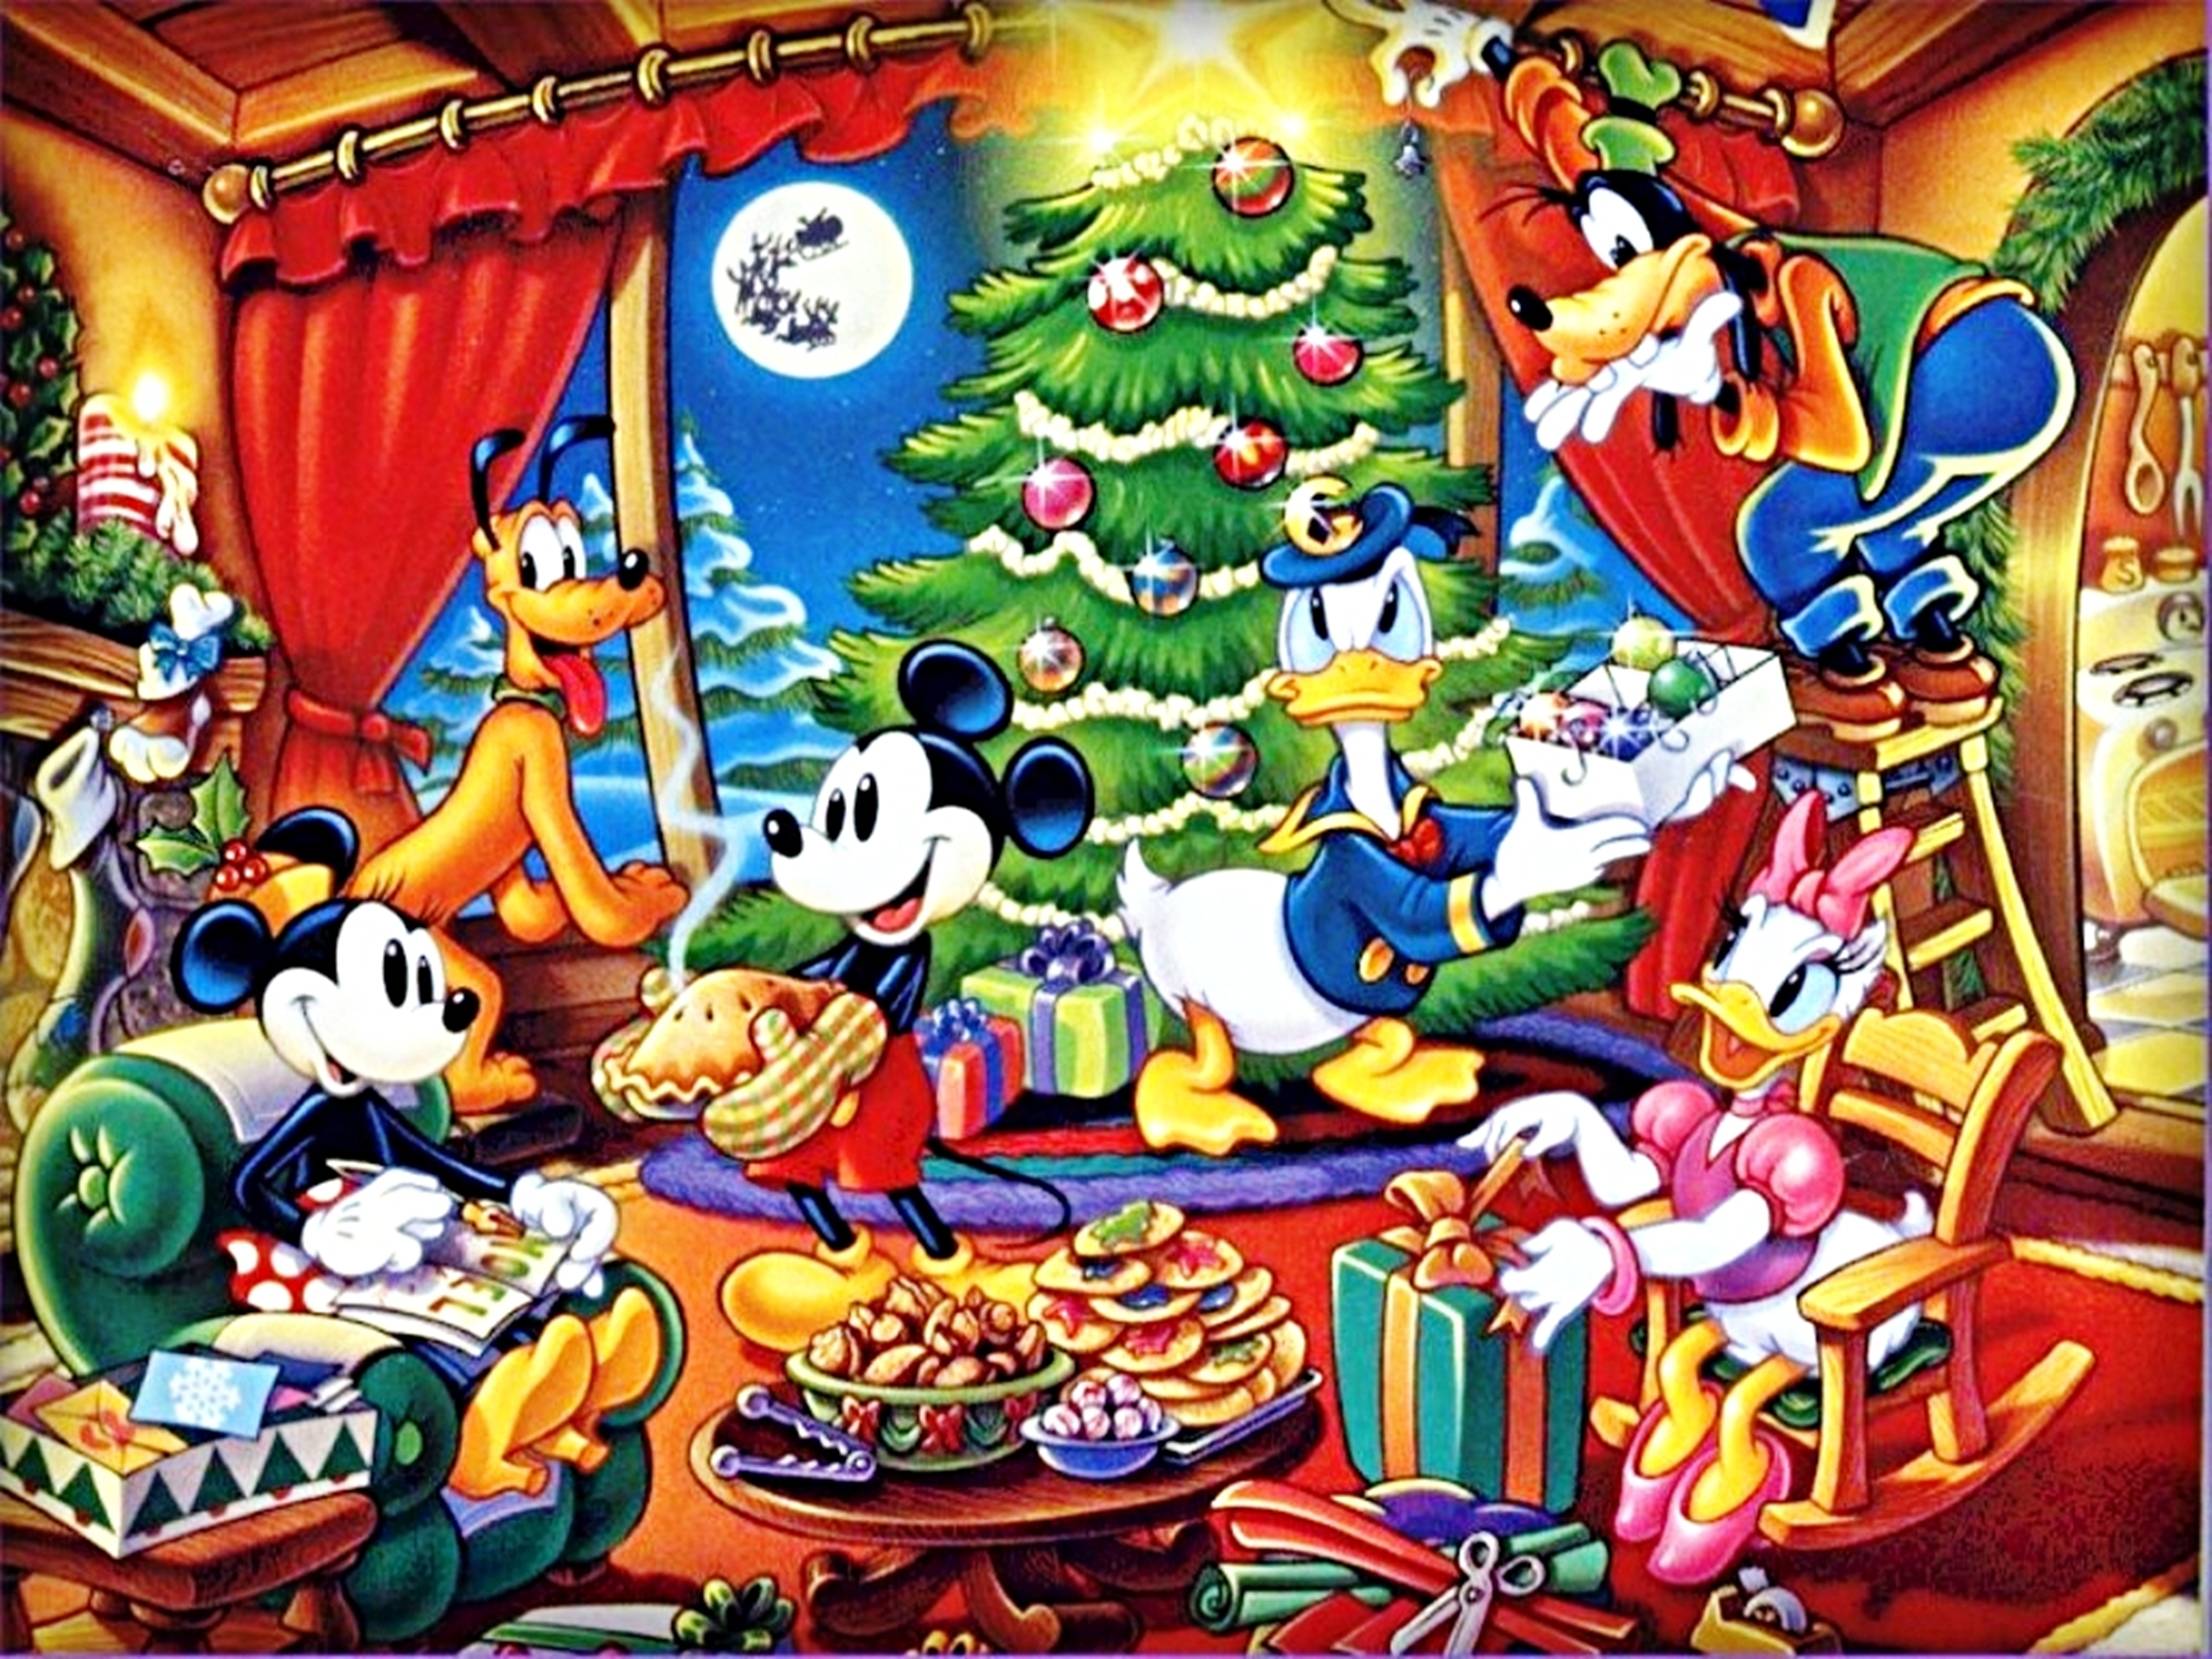 Christmas Cartoon Classic Wallpapers